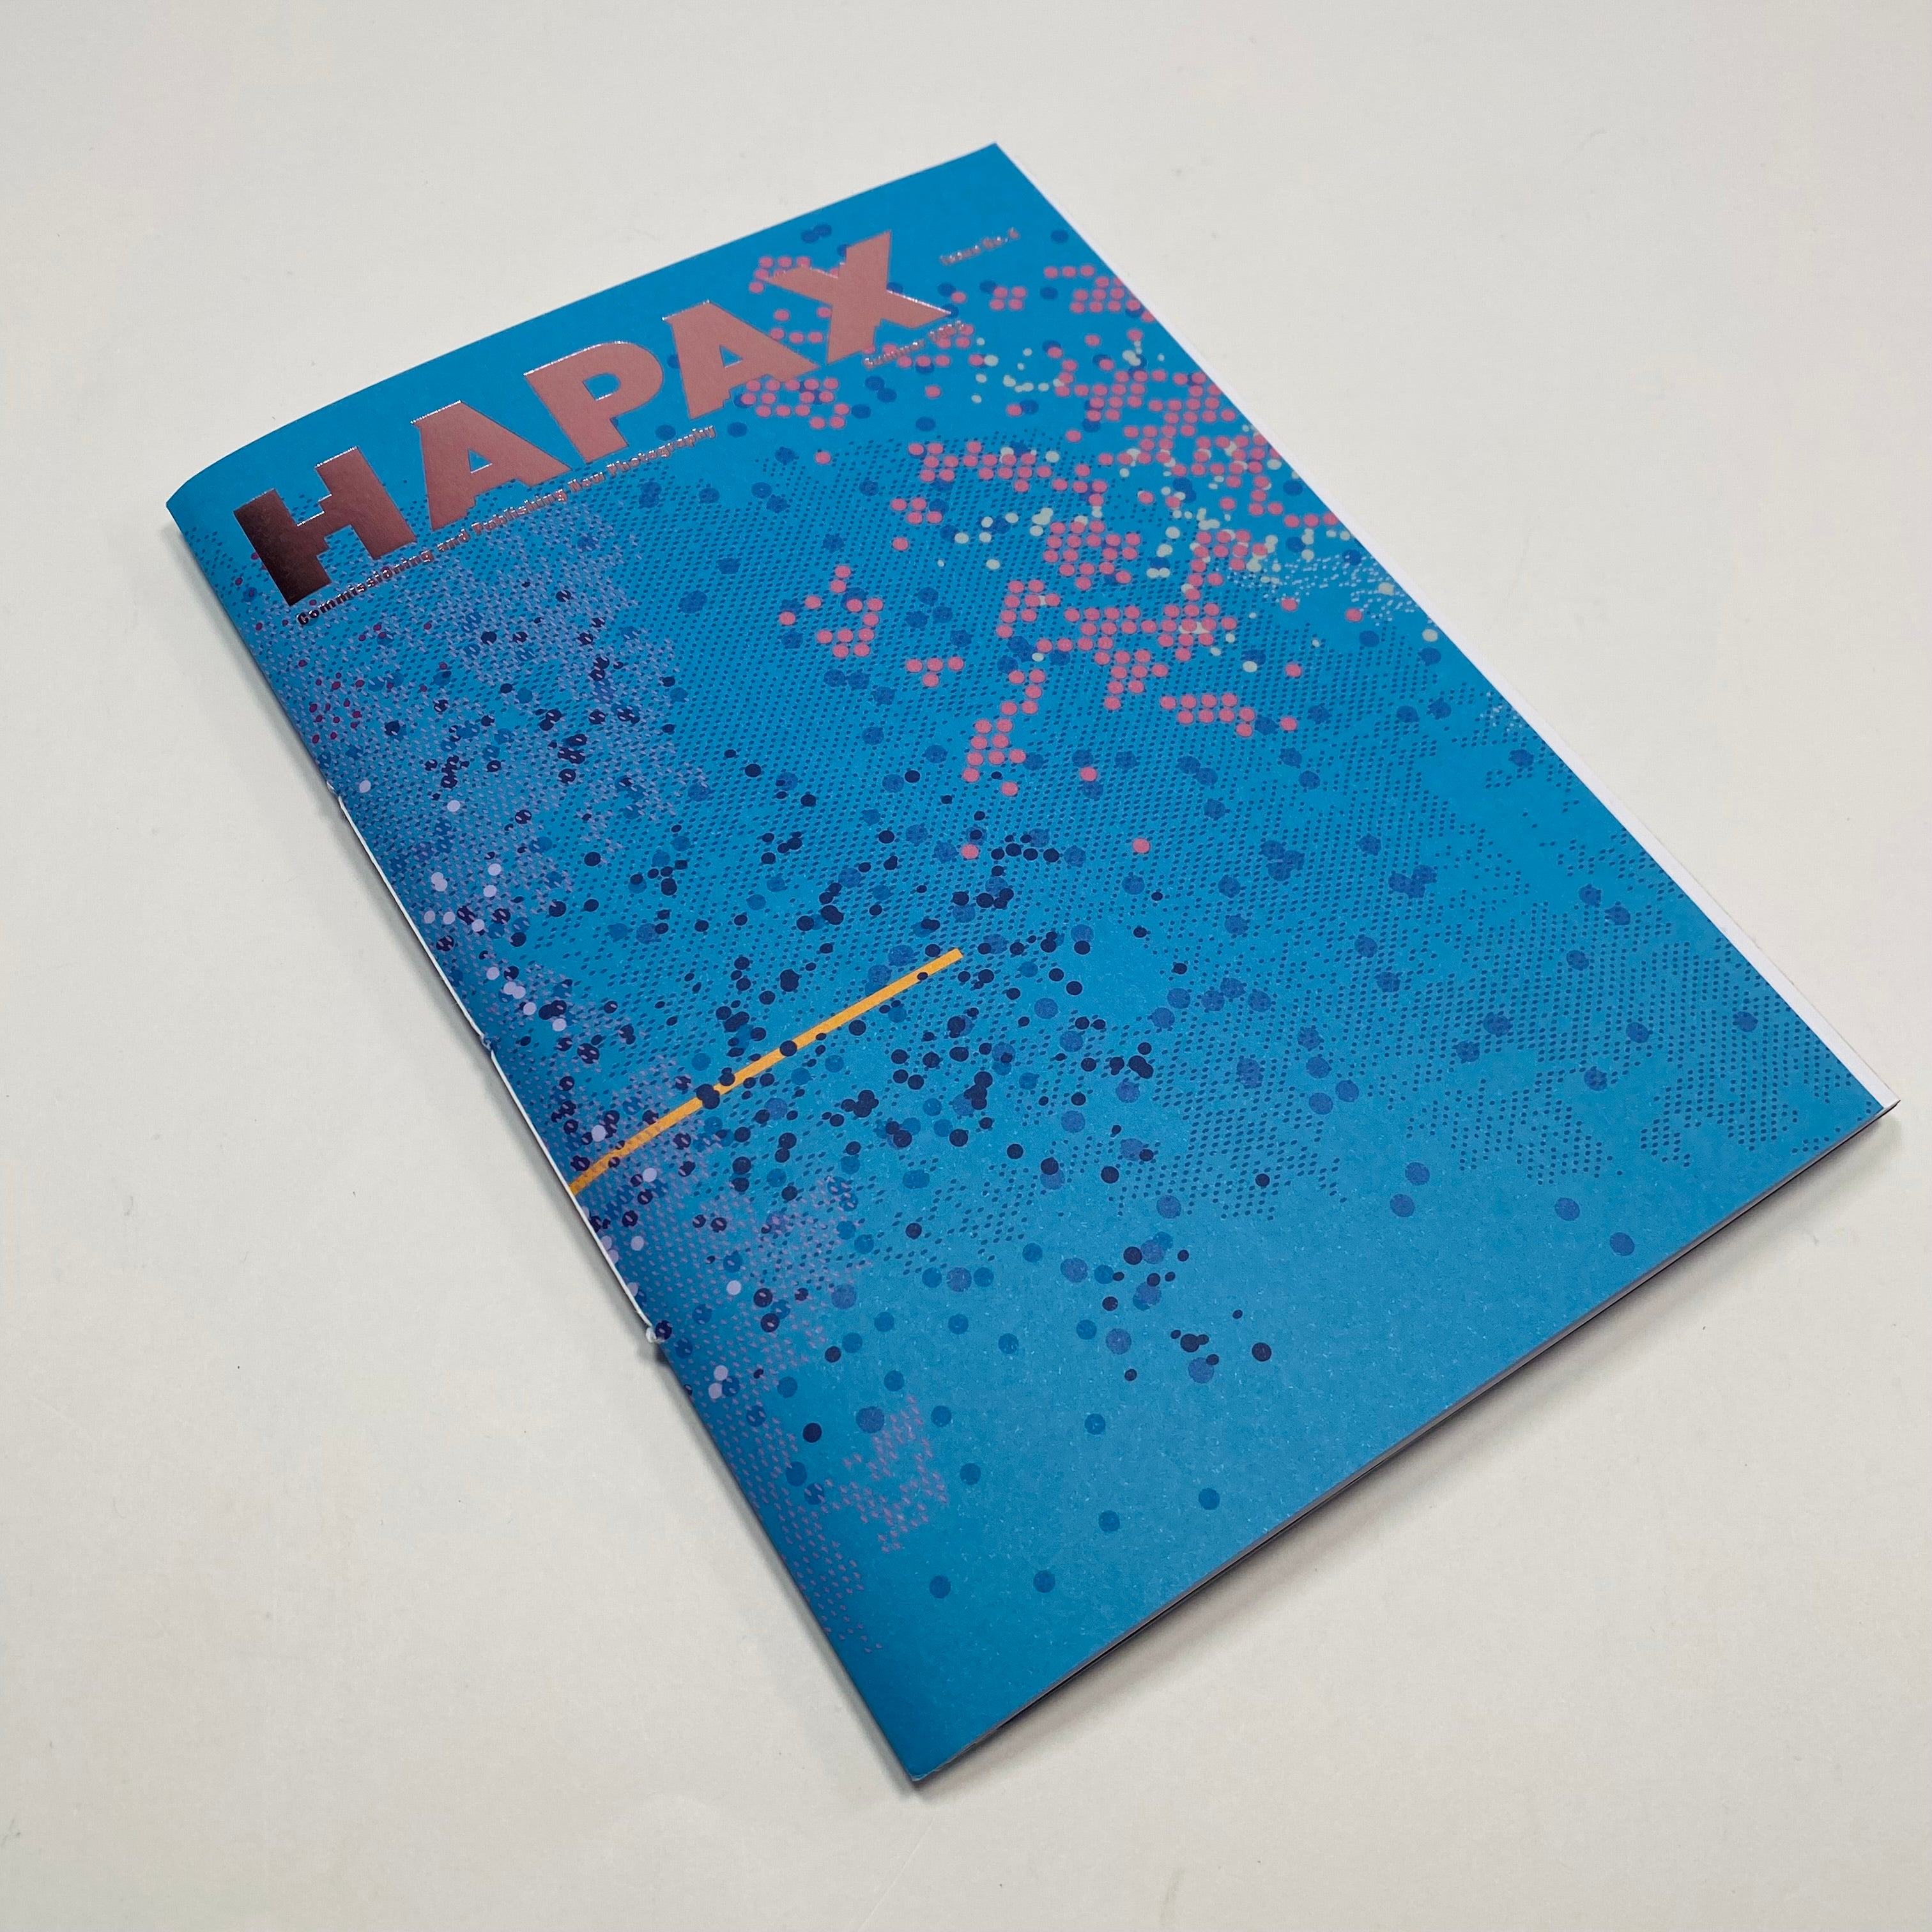 Hapax magazine